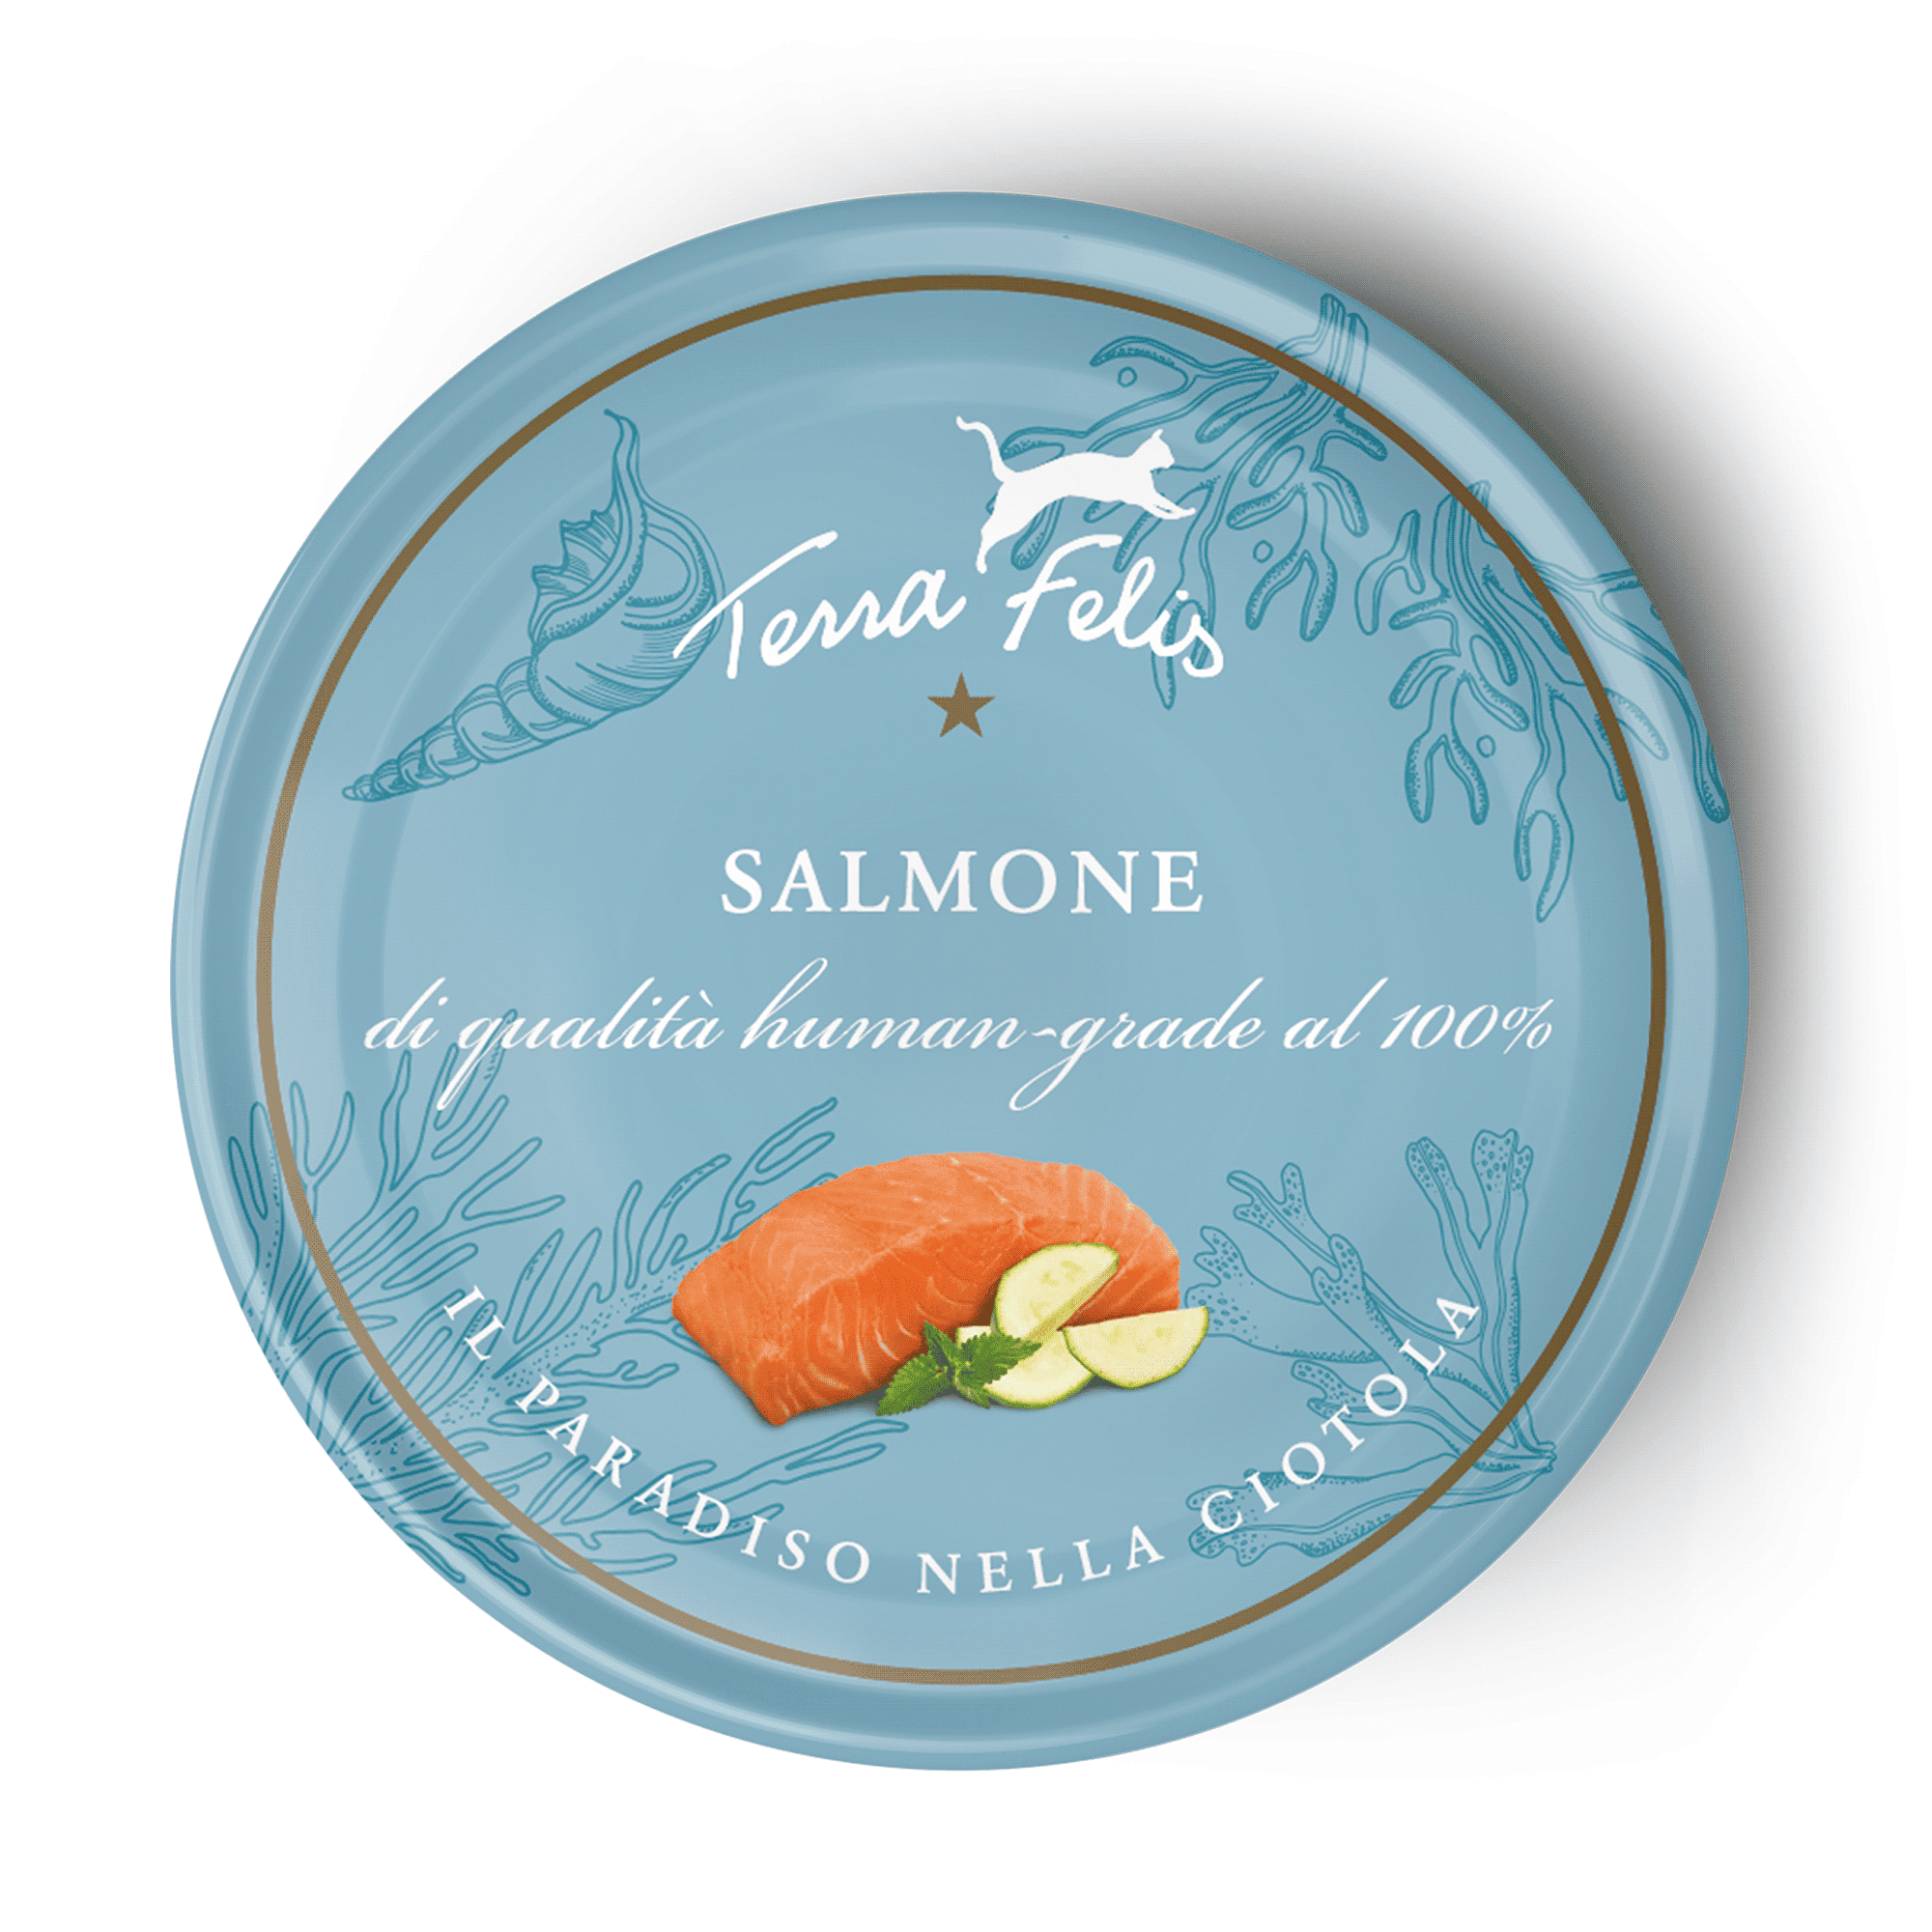 Salmone